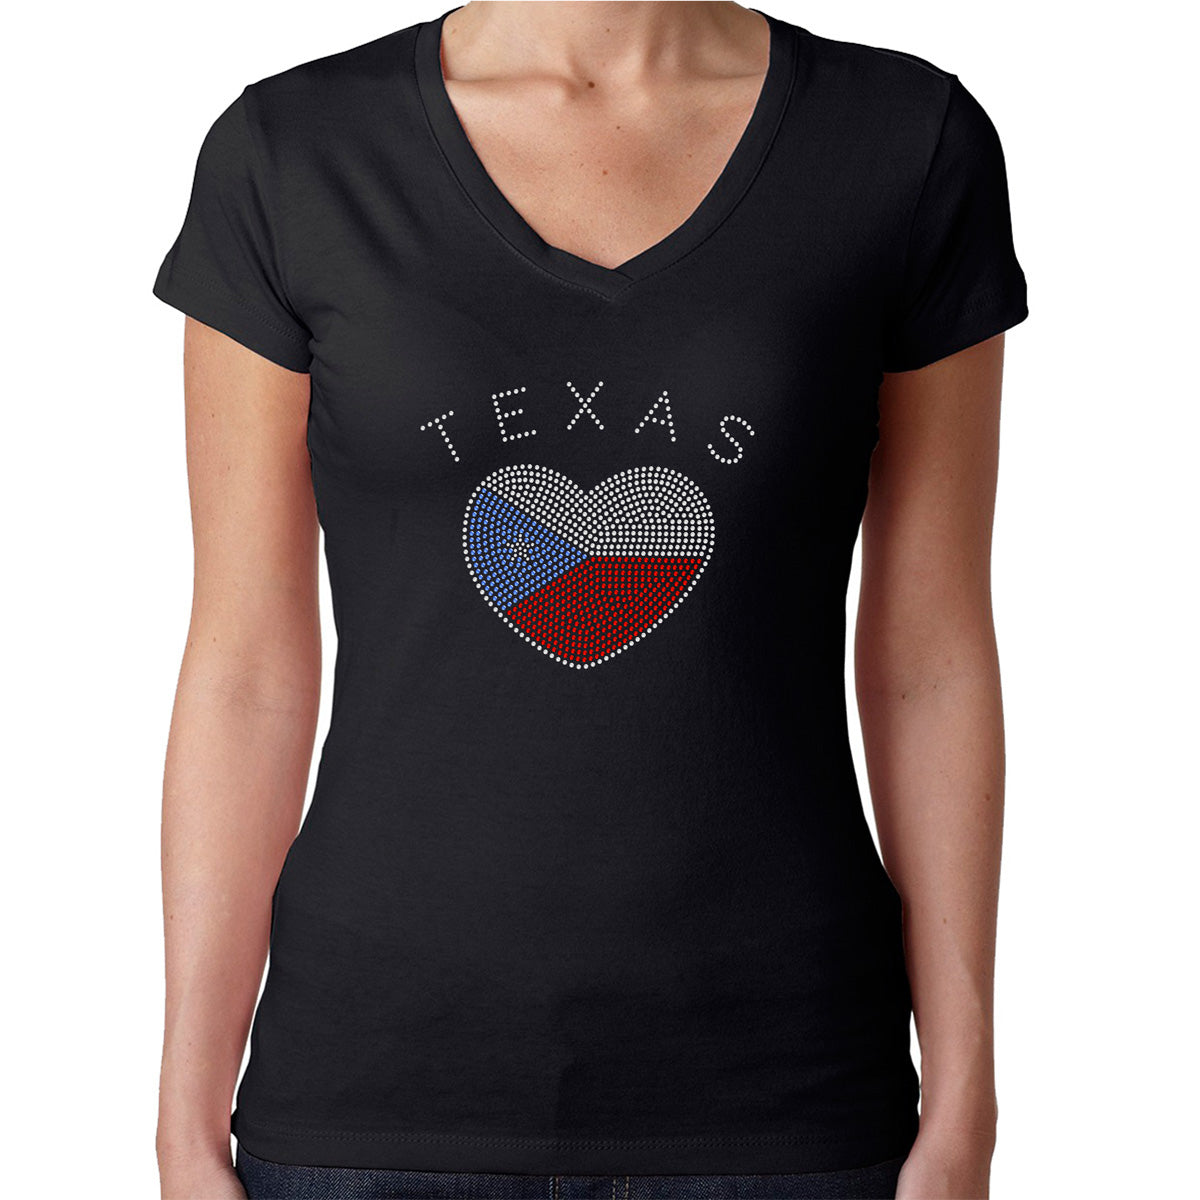 Womens T-Shirt Rhinestone Bling Black Fitted Tee Texas Flag Love Heart